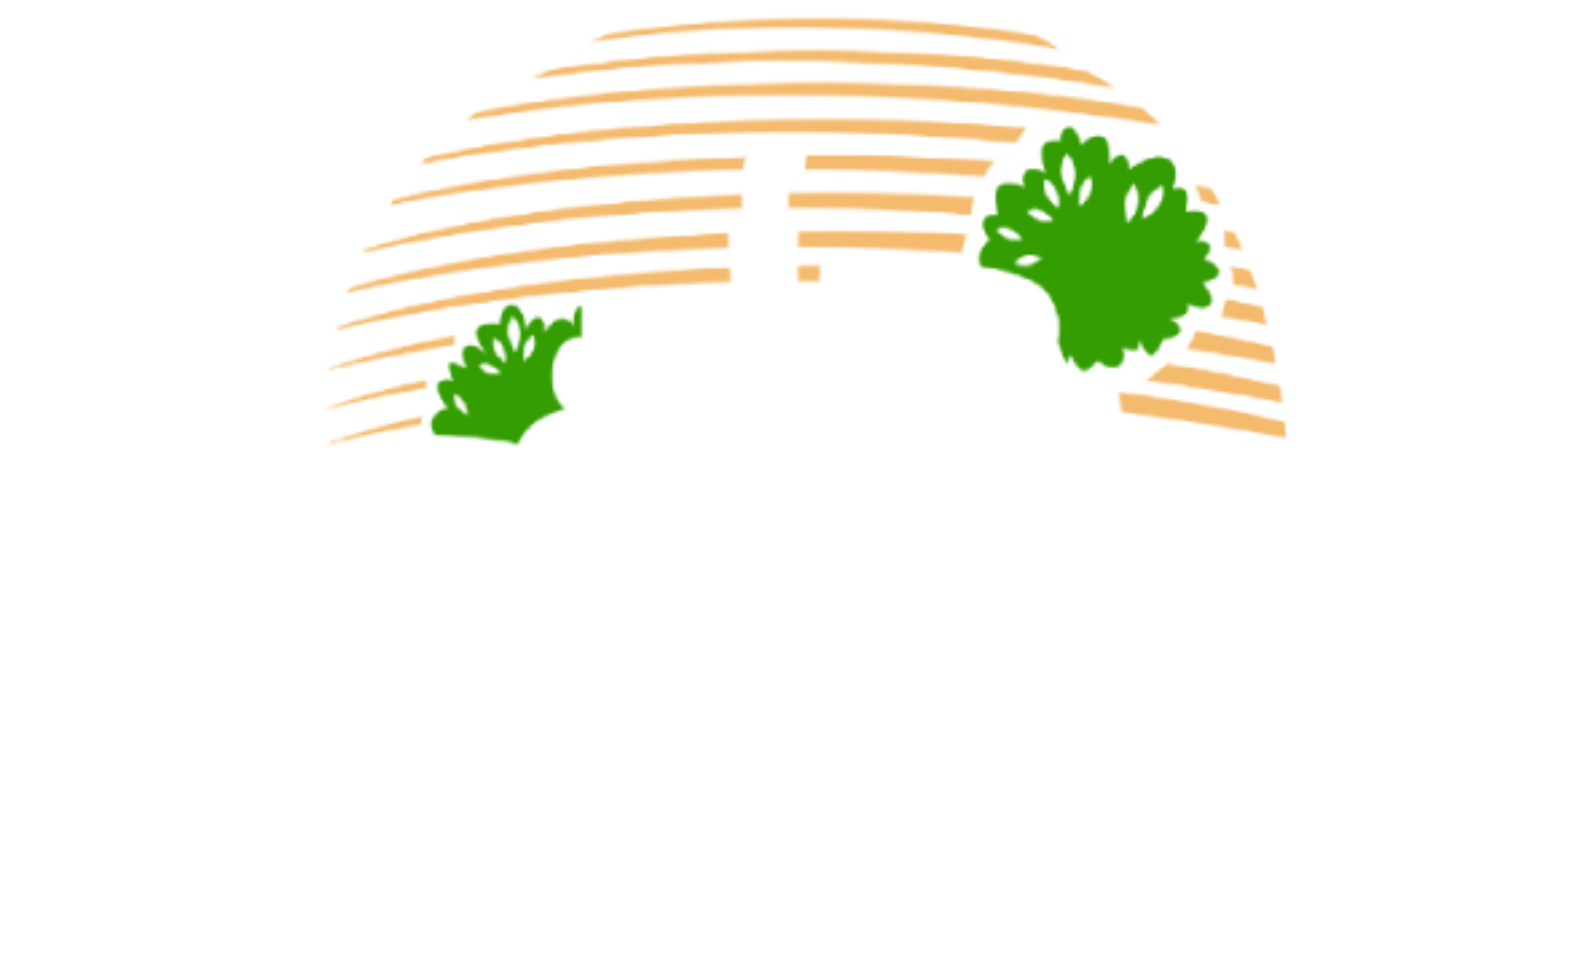 WEB TASARIM & YAZILIM